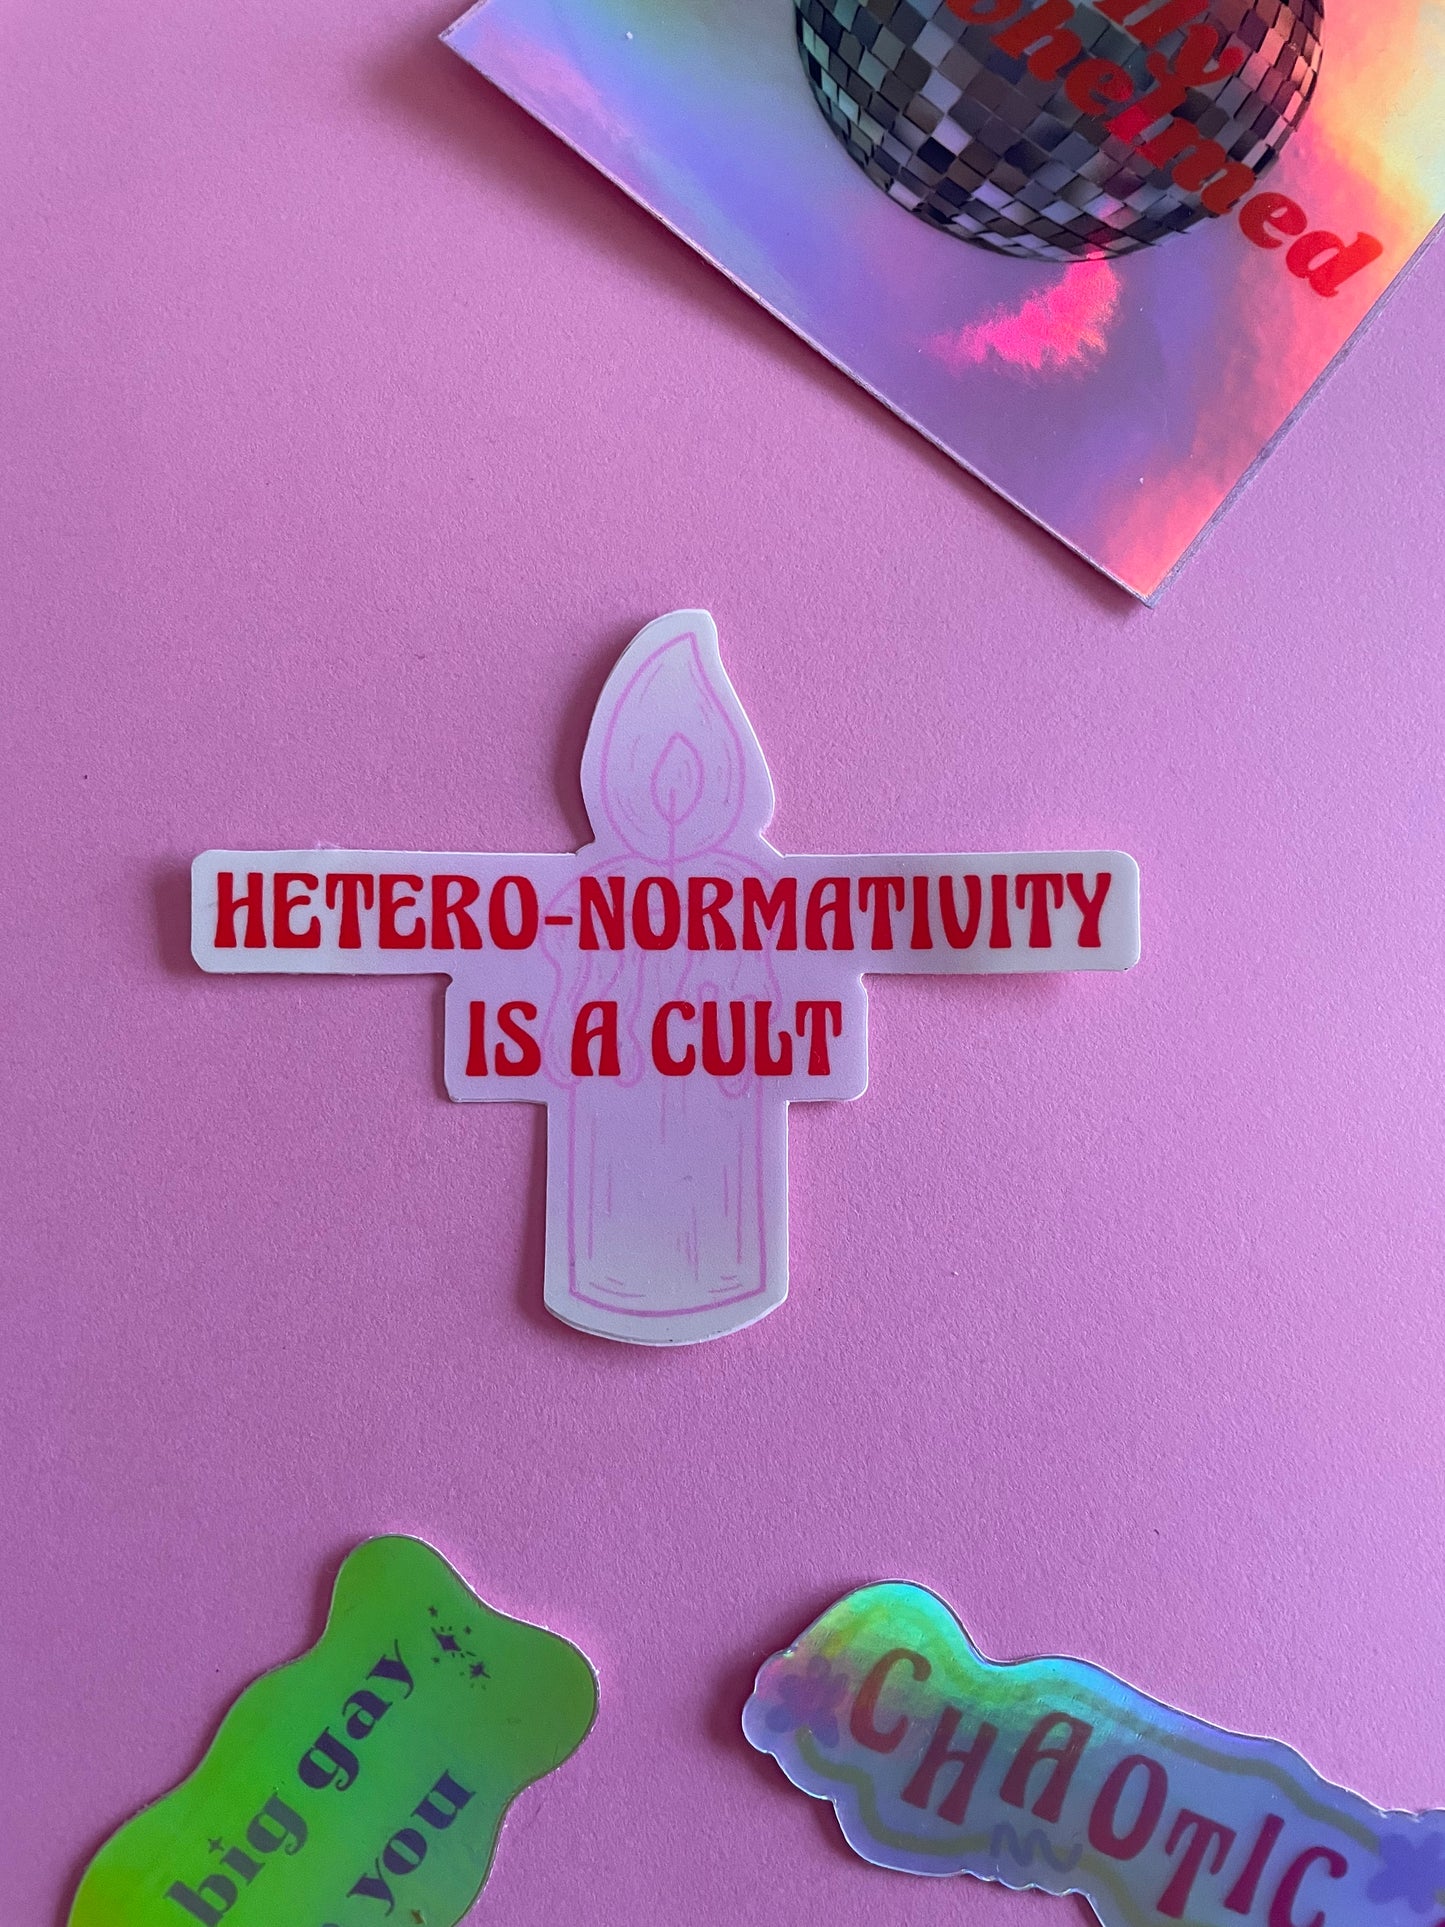 Hetero-normativity is a cult sticker